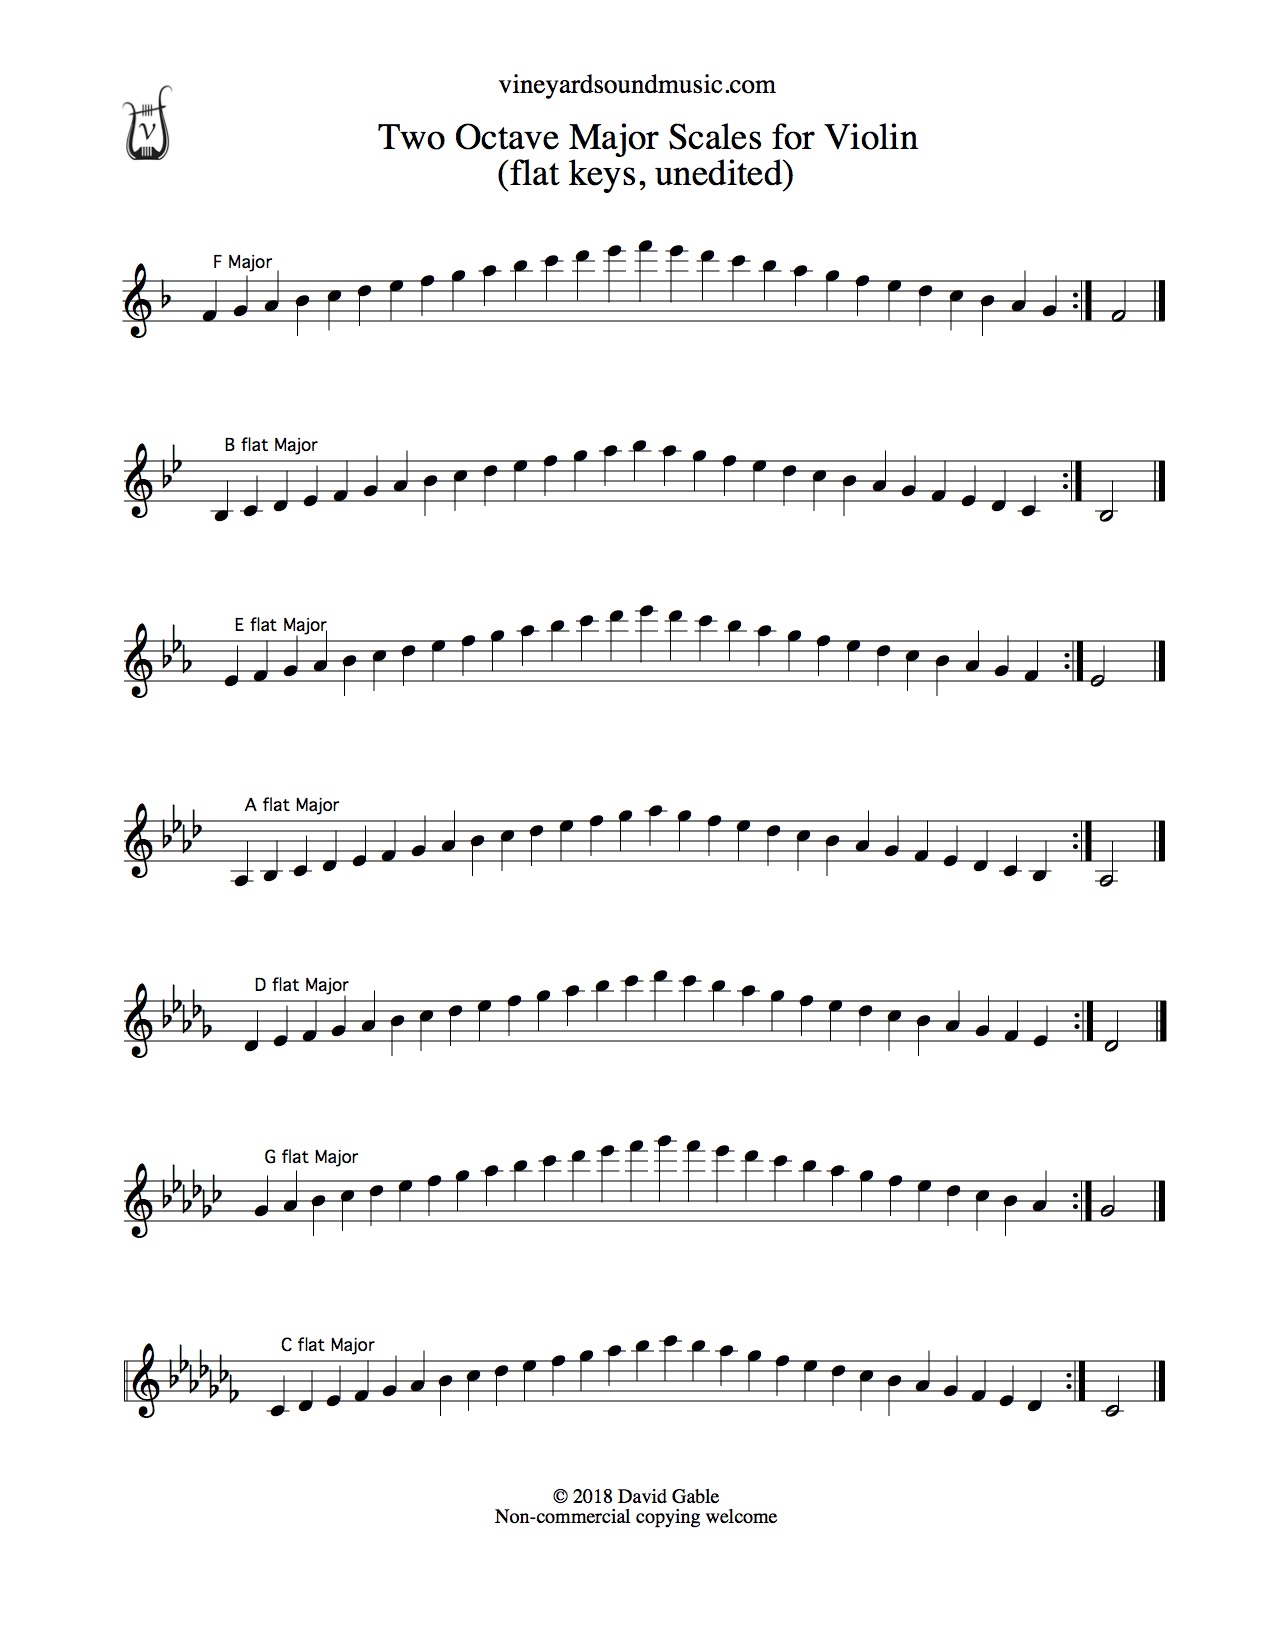 Violin Major Scales 2 Octaves Flat Keys Vineyard Sound Music